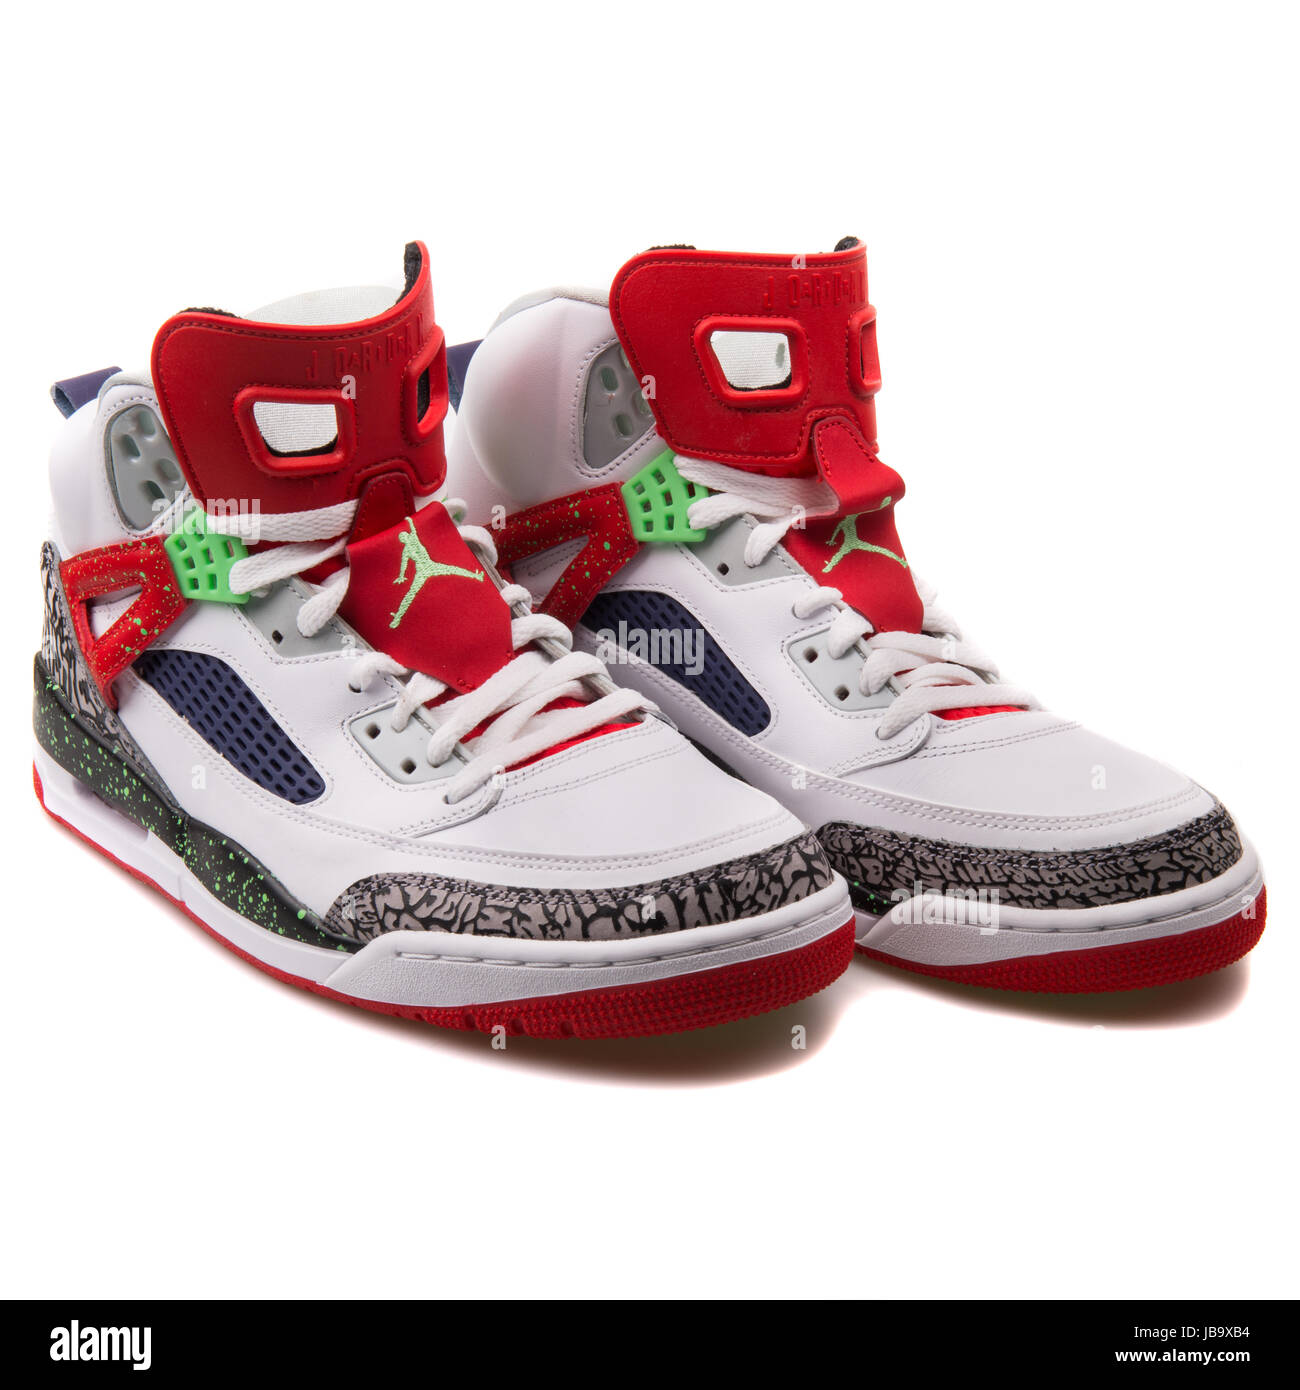 Nike Jordan Spizike White, Black, Red and Neon Green Men's Basketball Shoes  - 315371-132 Stock Photo - Alamy